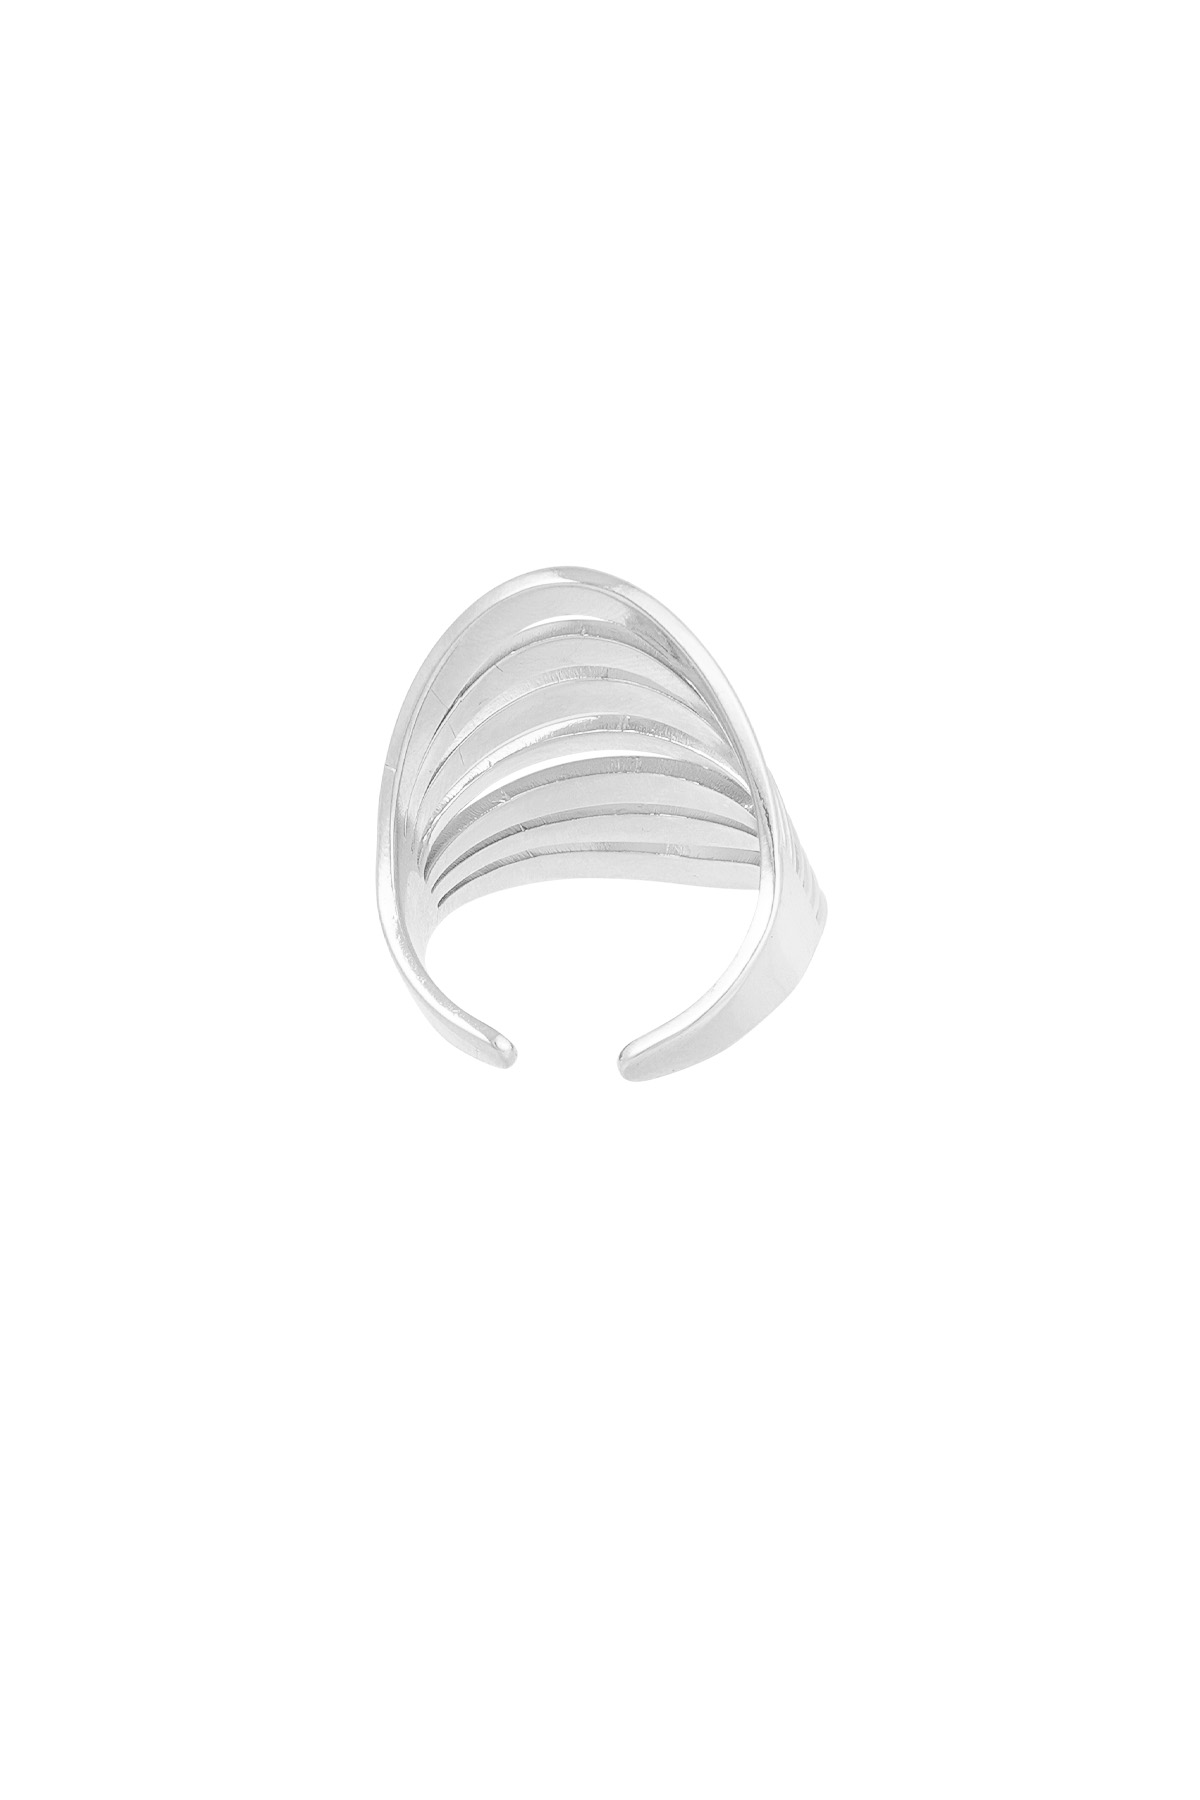 Grote gelaagde ring - zilver h5 Afbeelding4